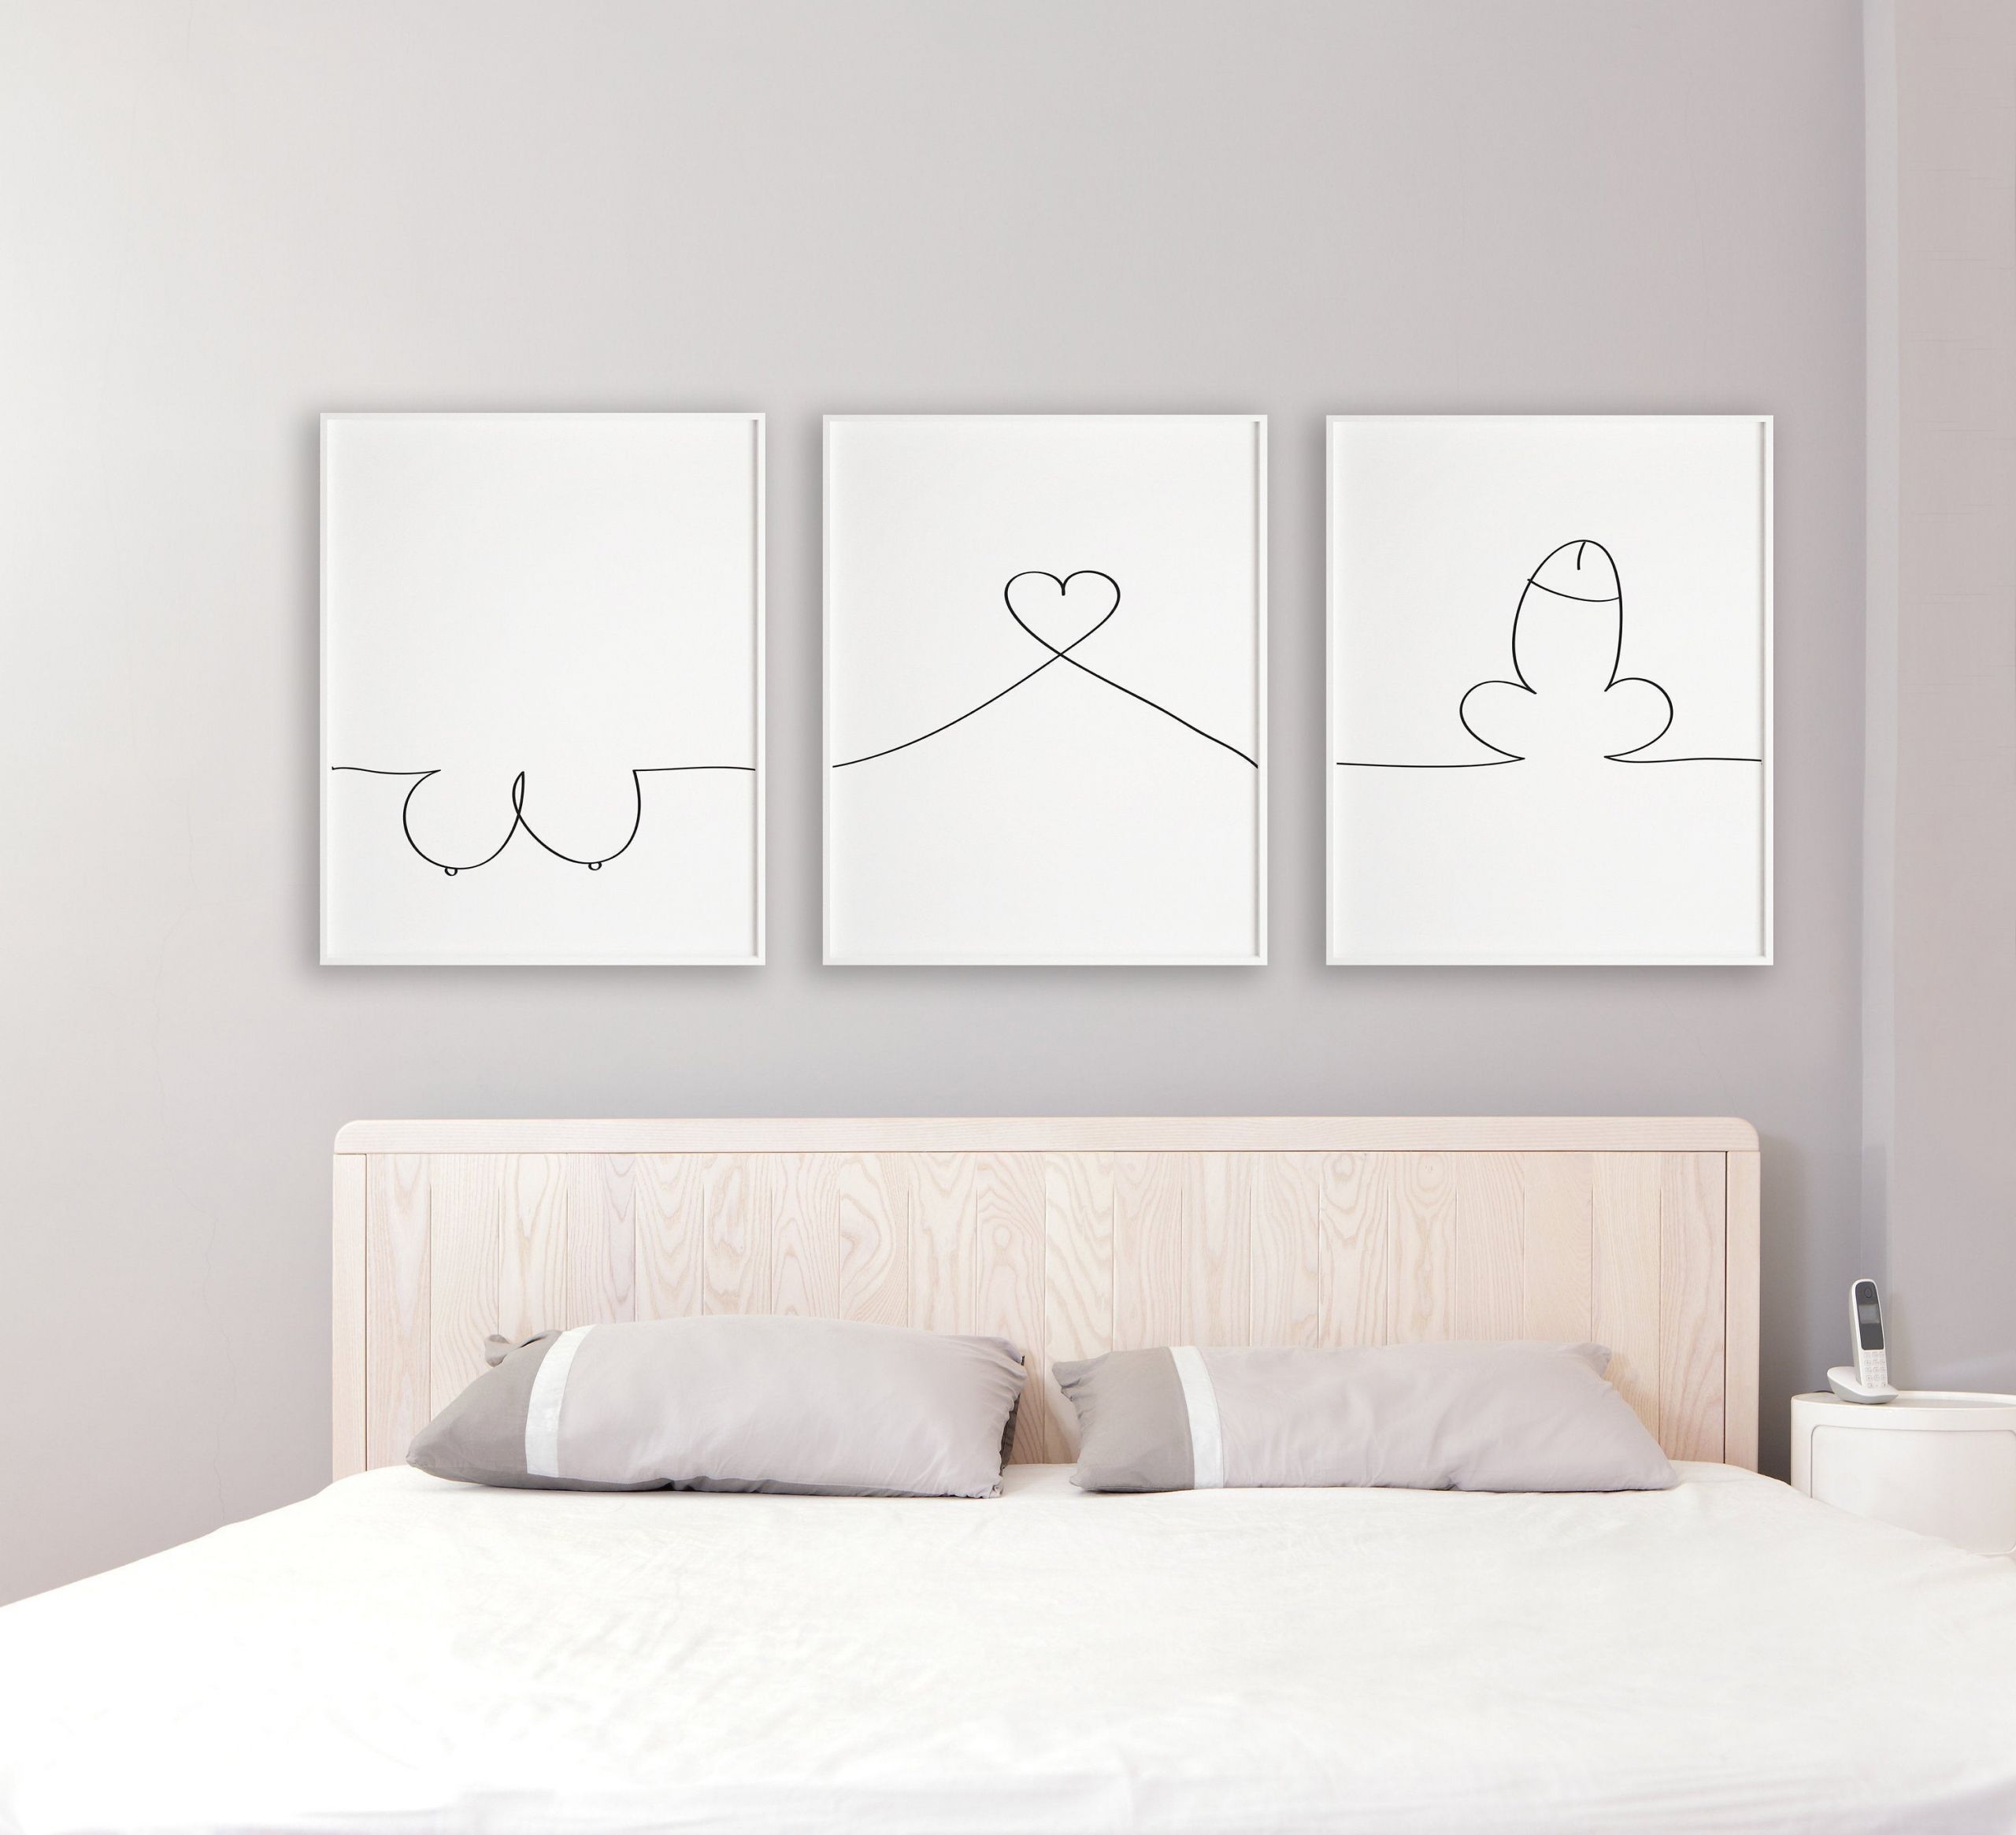 Wall Prints For Bedroom
 Mature Bedroom Prints Bedroom Wall Art Bedroom Decor Adult